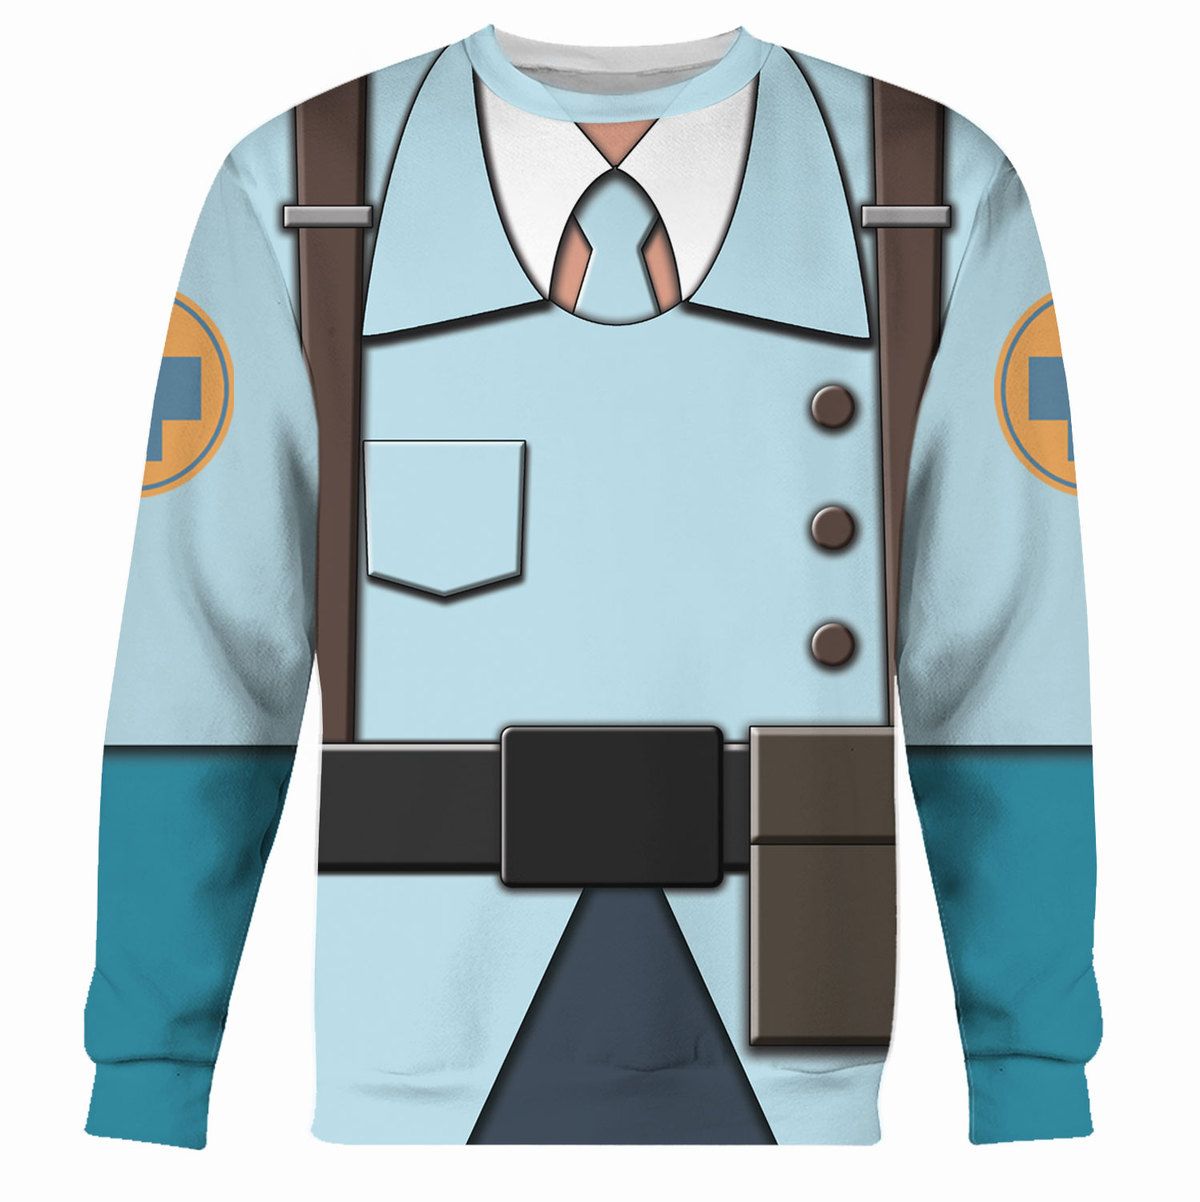 Medic Blue Team TF2 sweatshirt